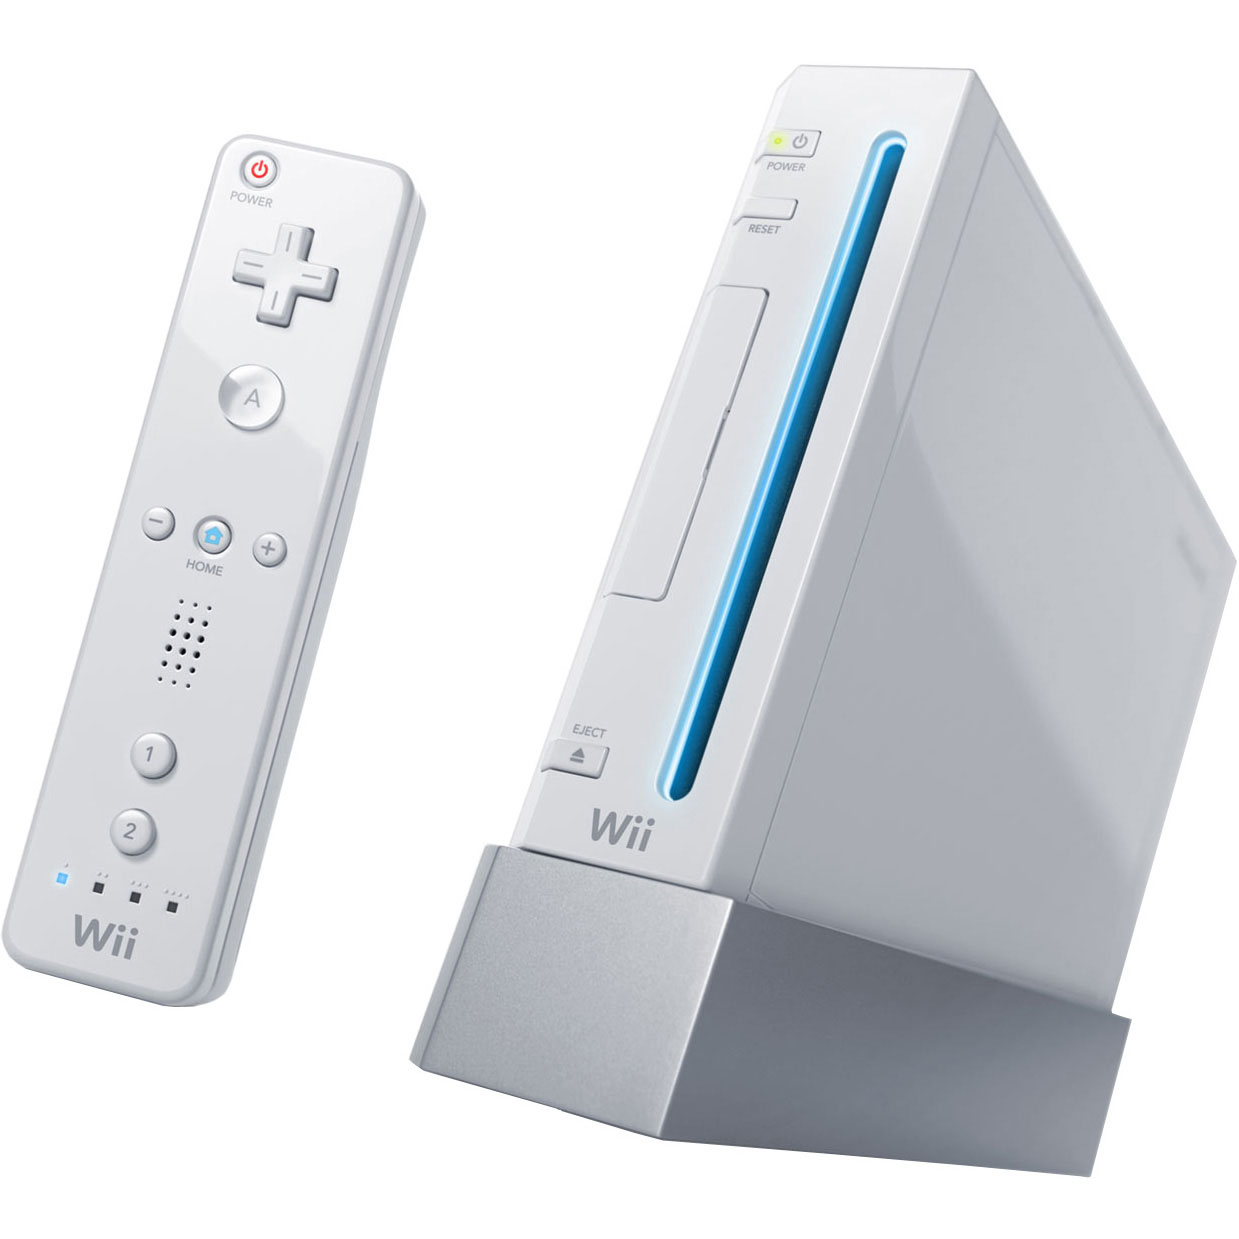 Nintendo Wii review | Stuff